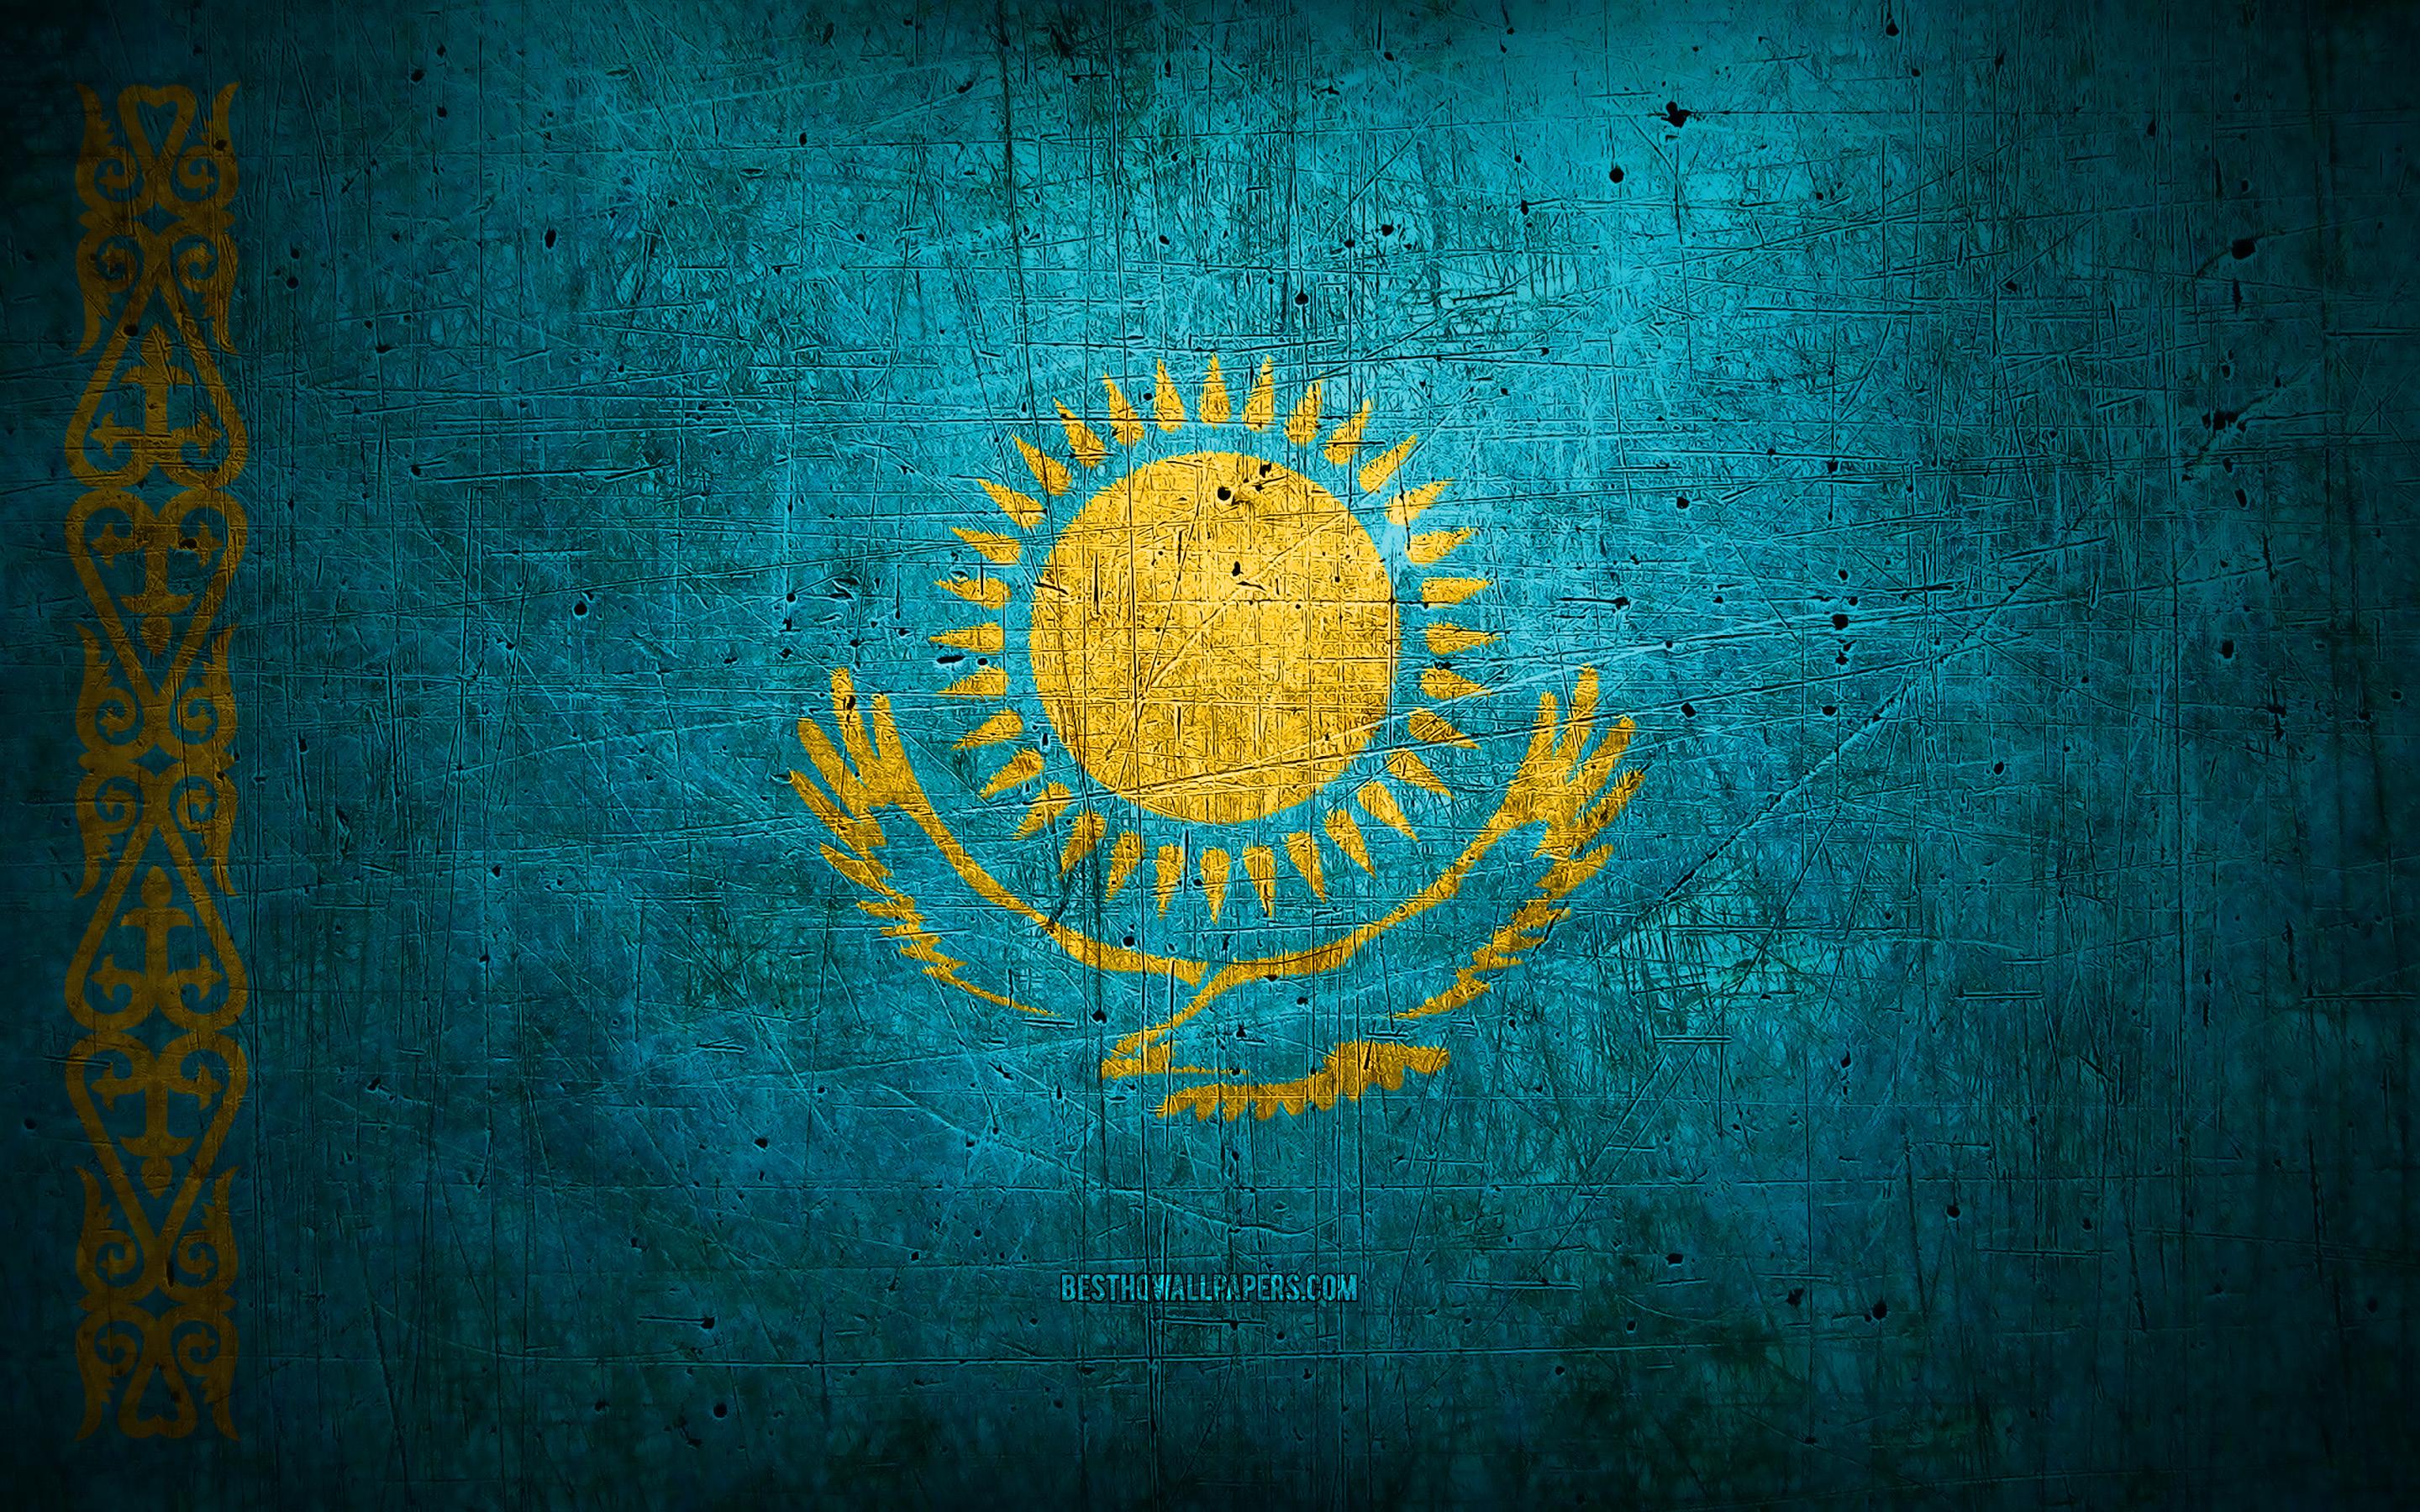 Download wallpapers Flag of Kazakhstan, 4k, Asia, wooden texture